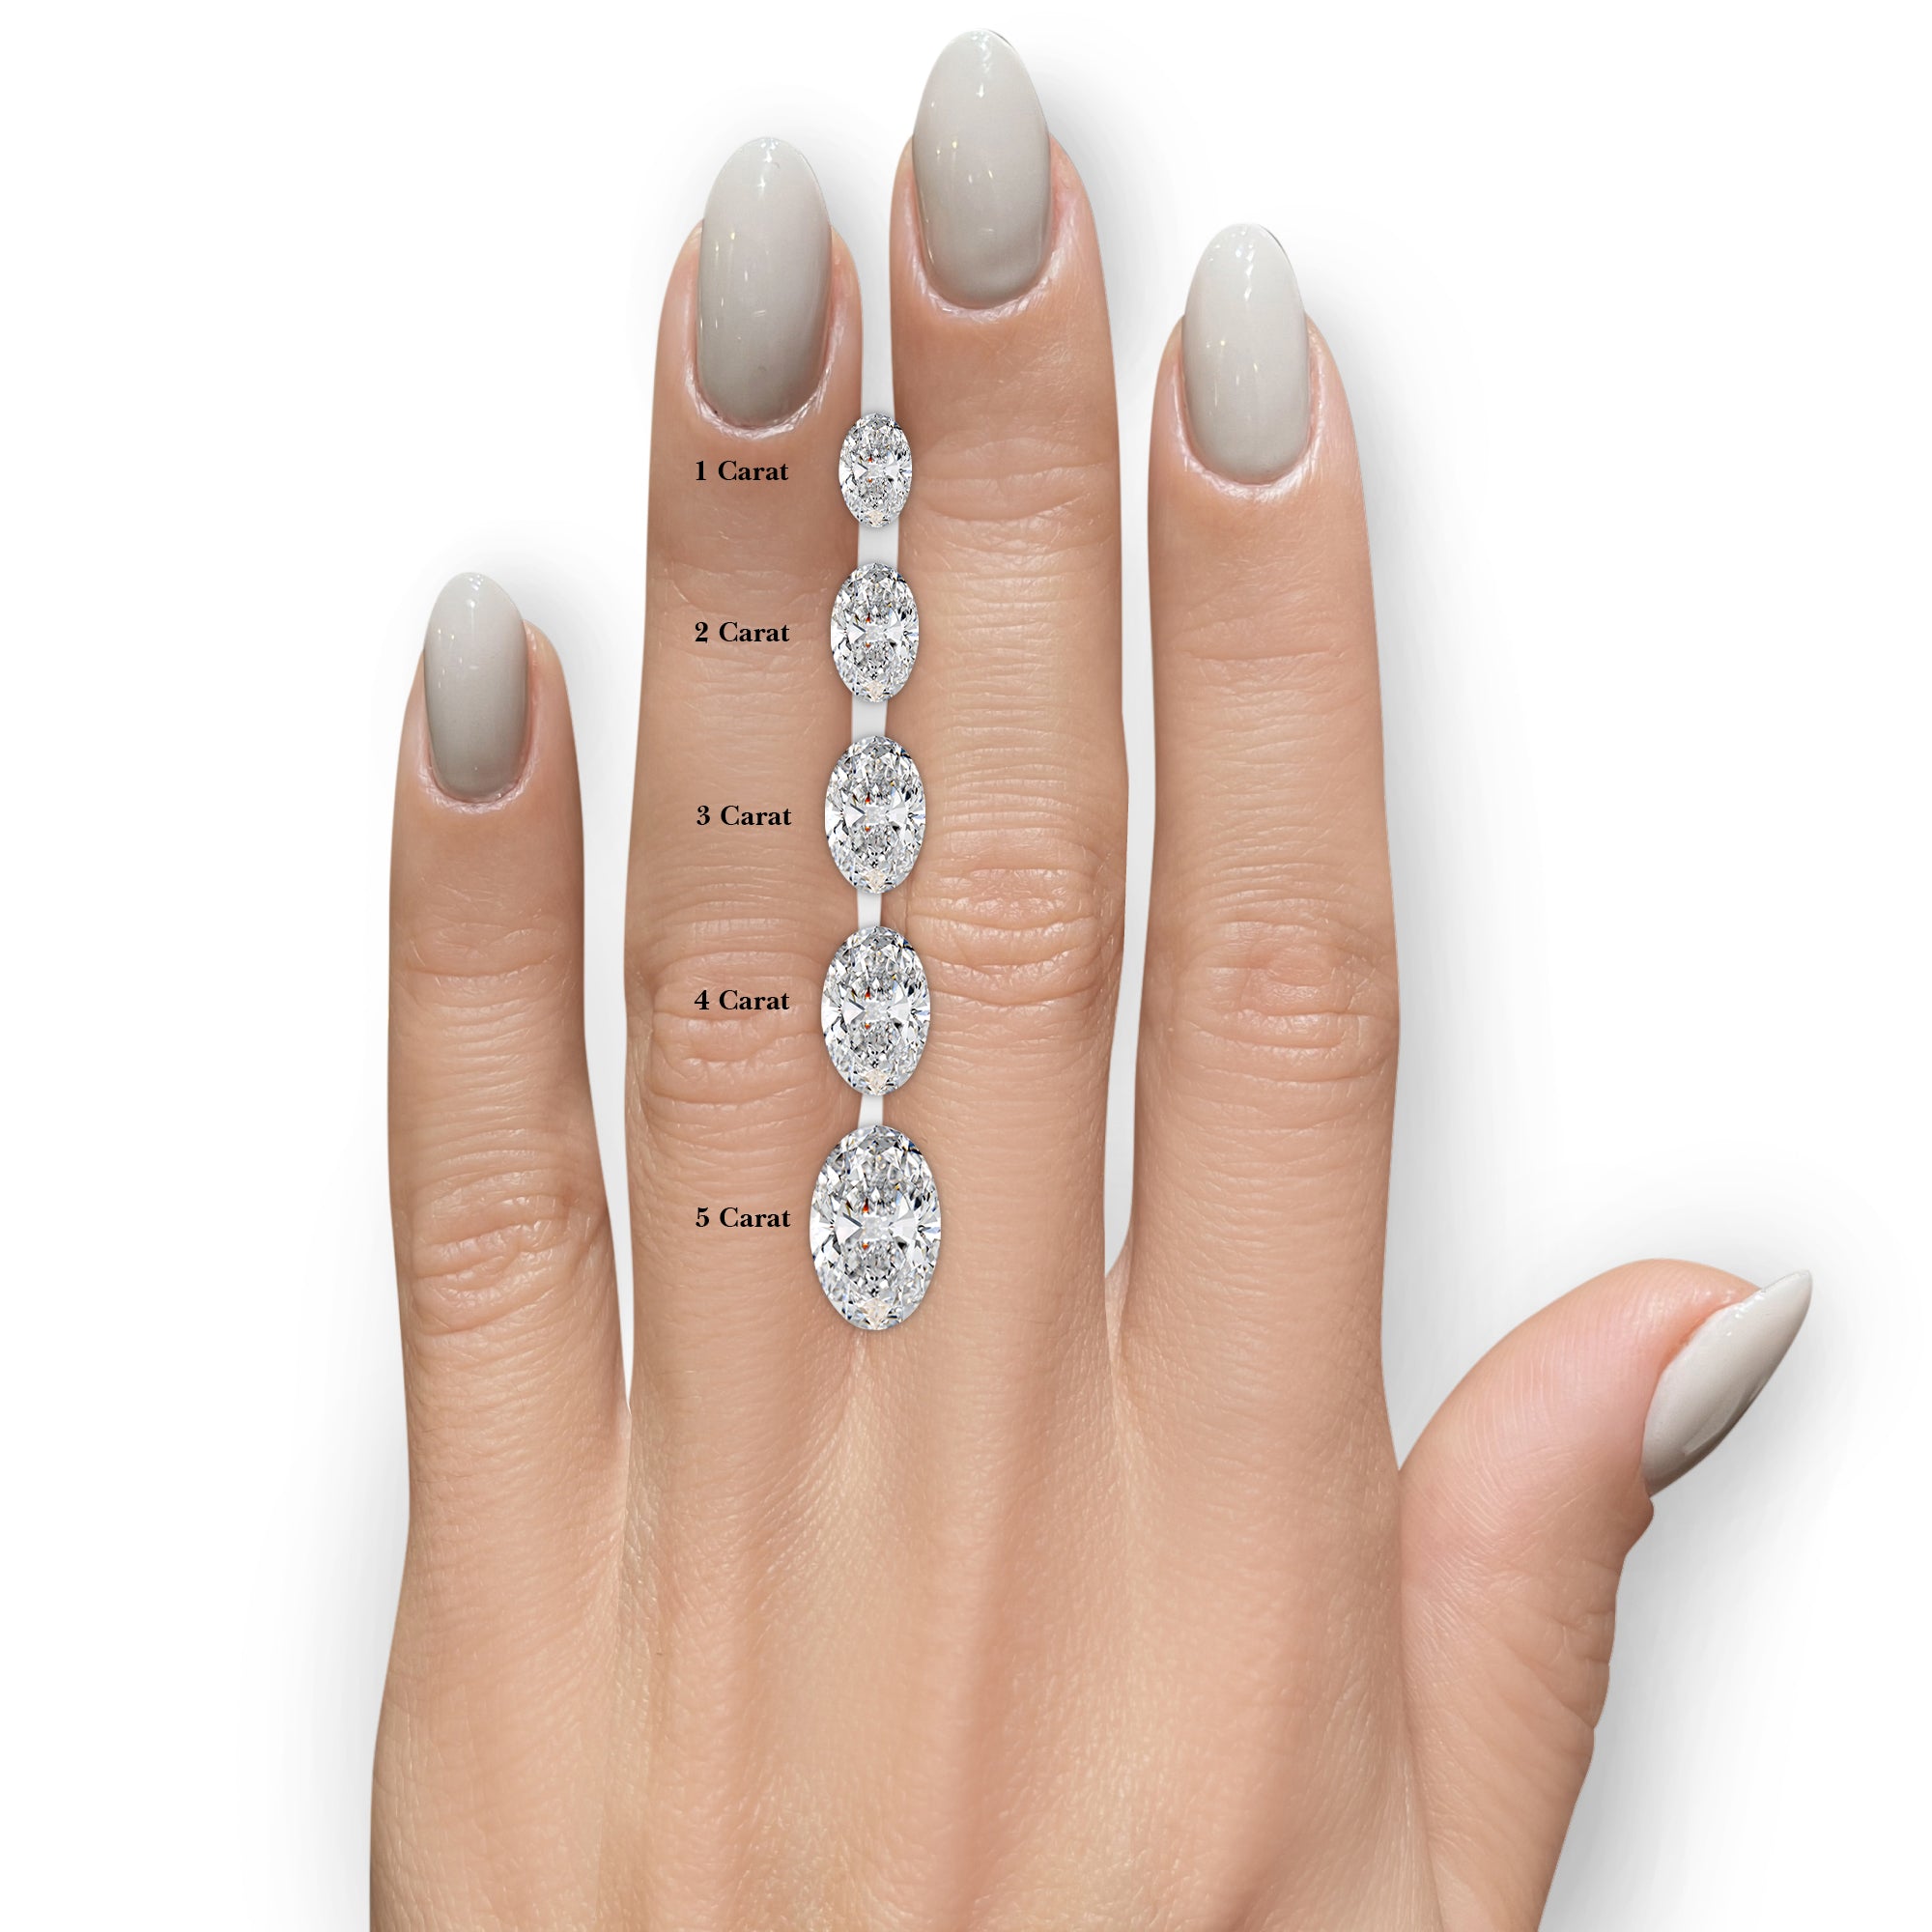 Maria Diamond Engagement Ring -18K White Gold